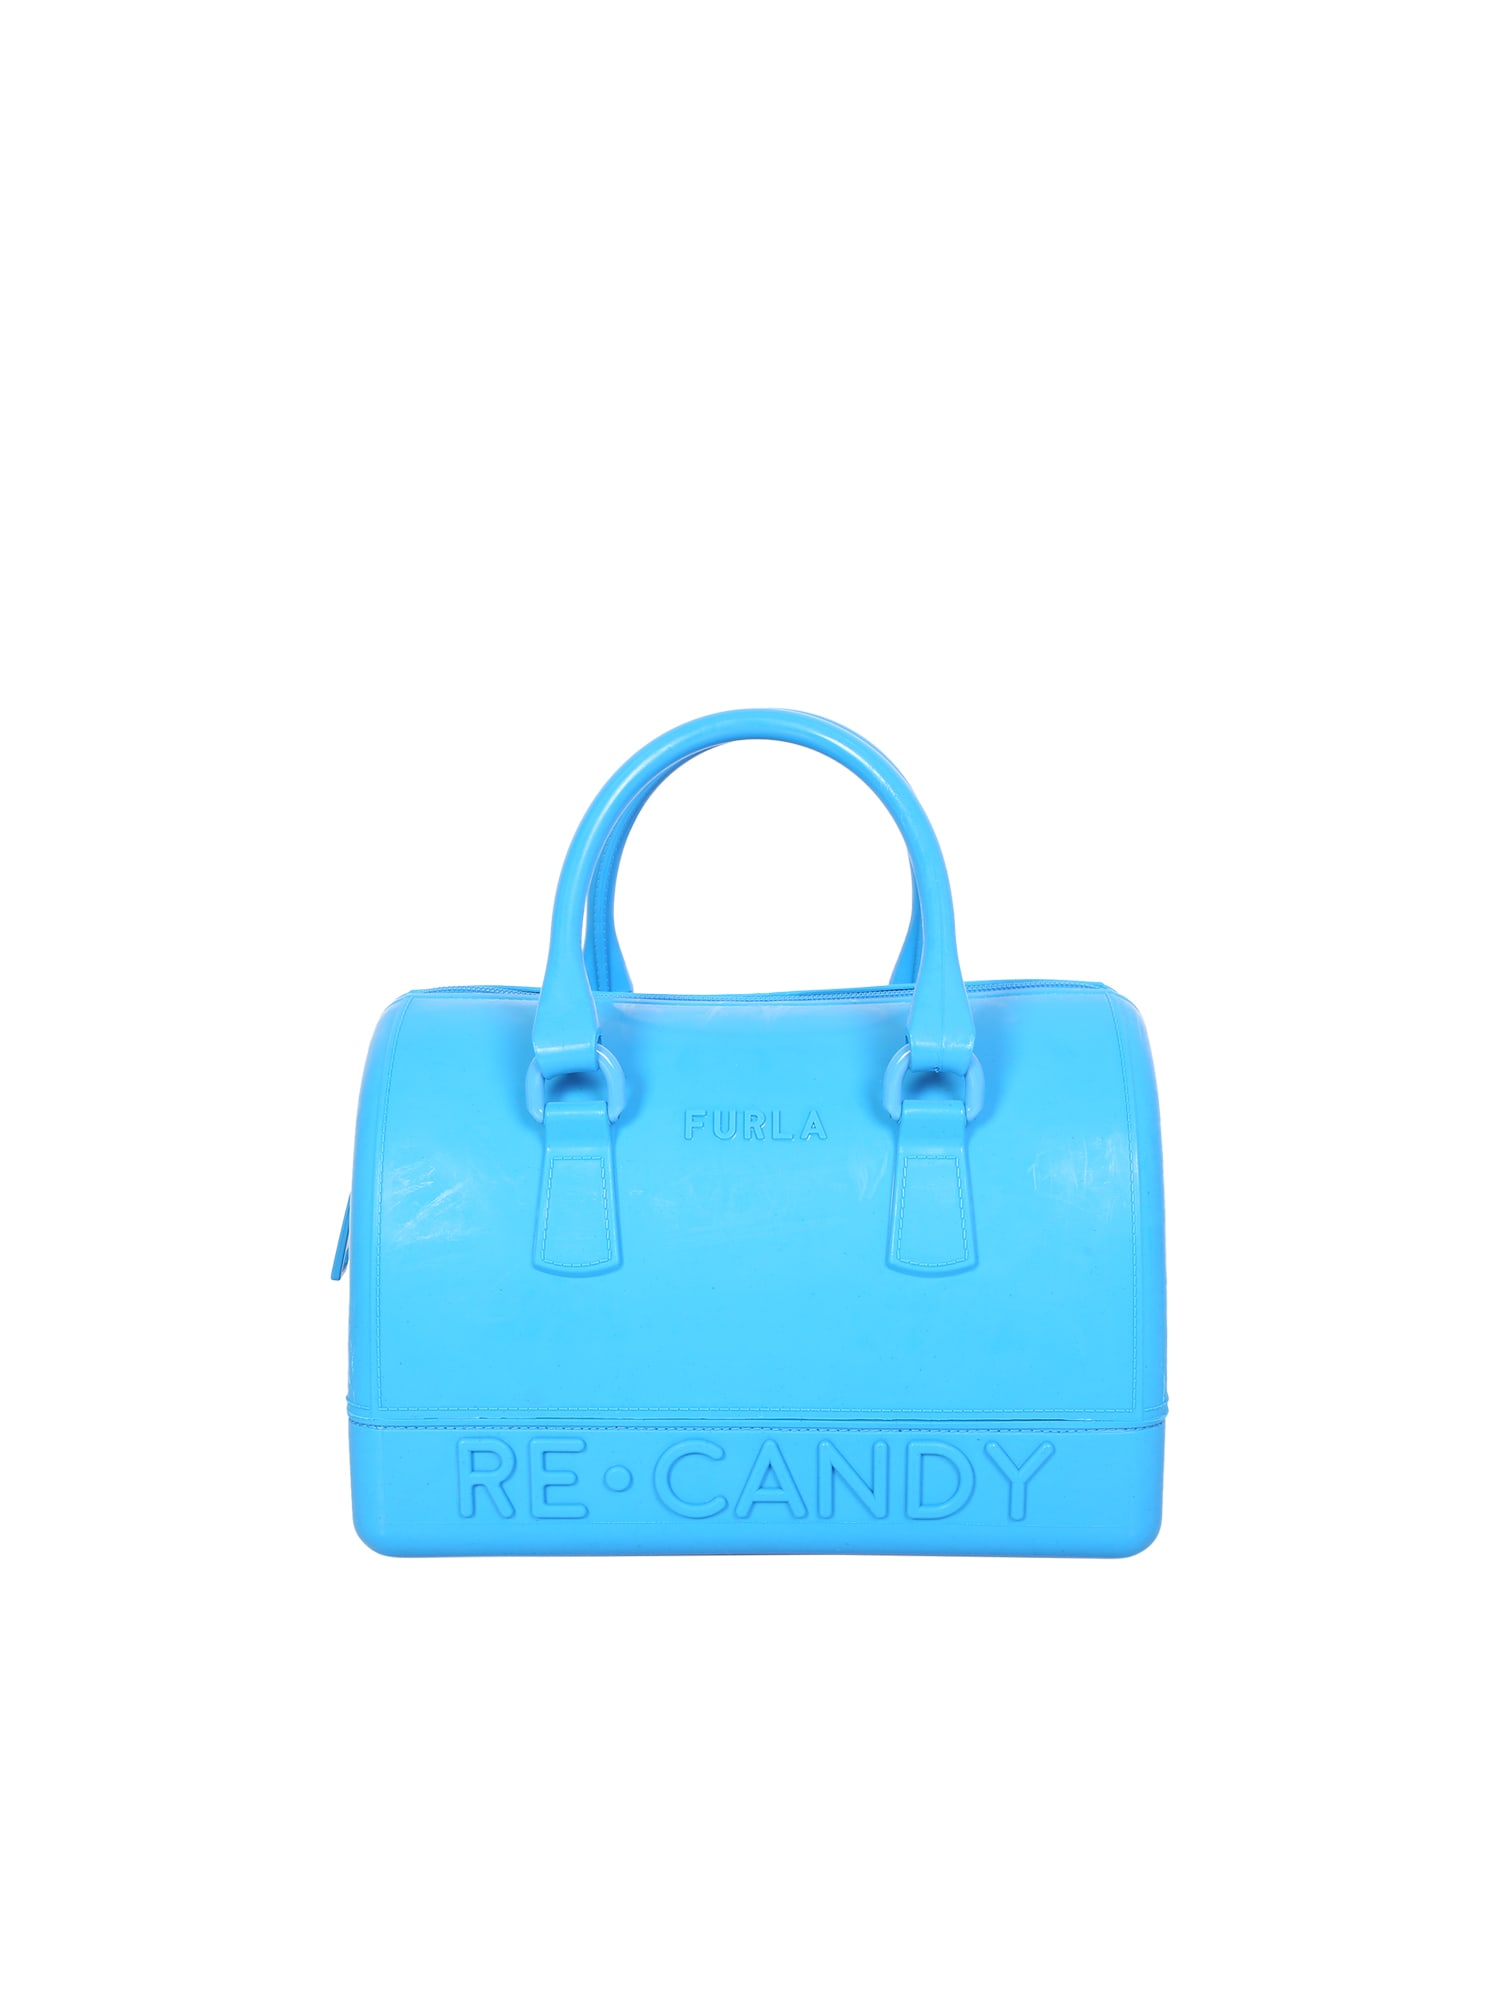 Candy Handbag By Furla